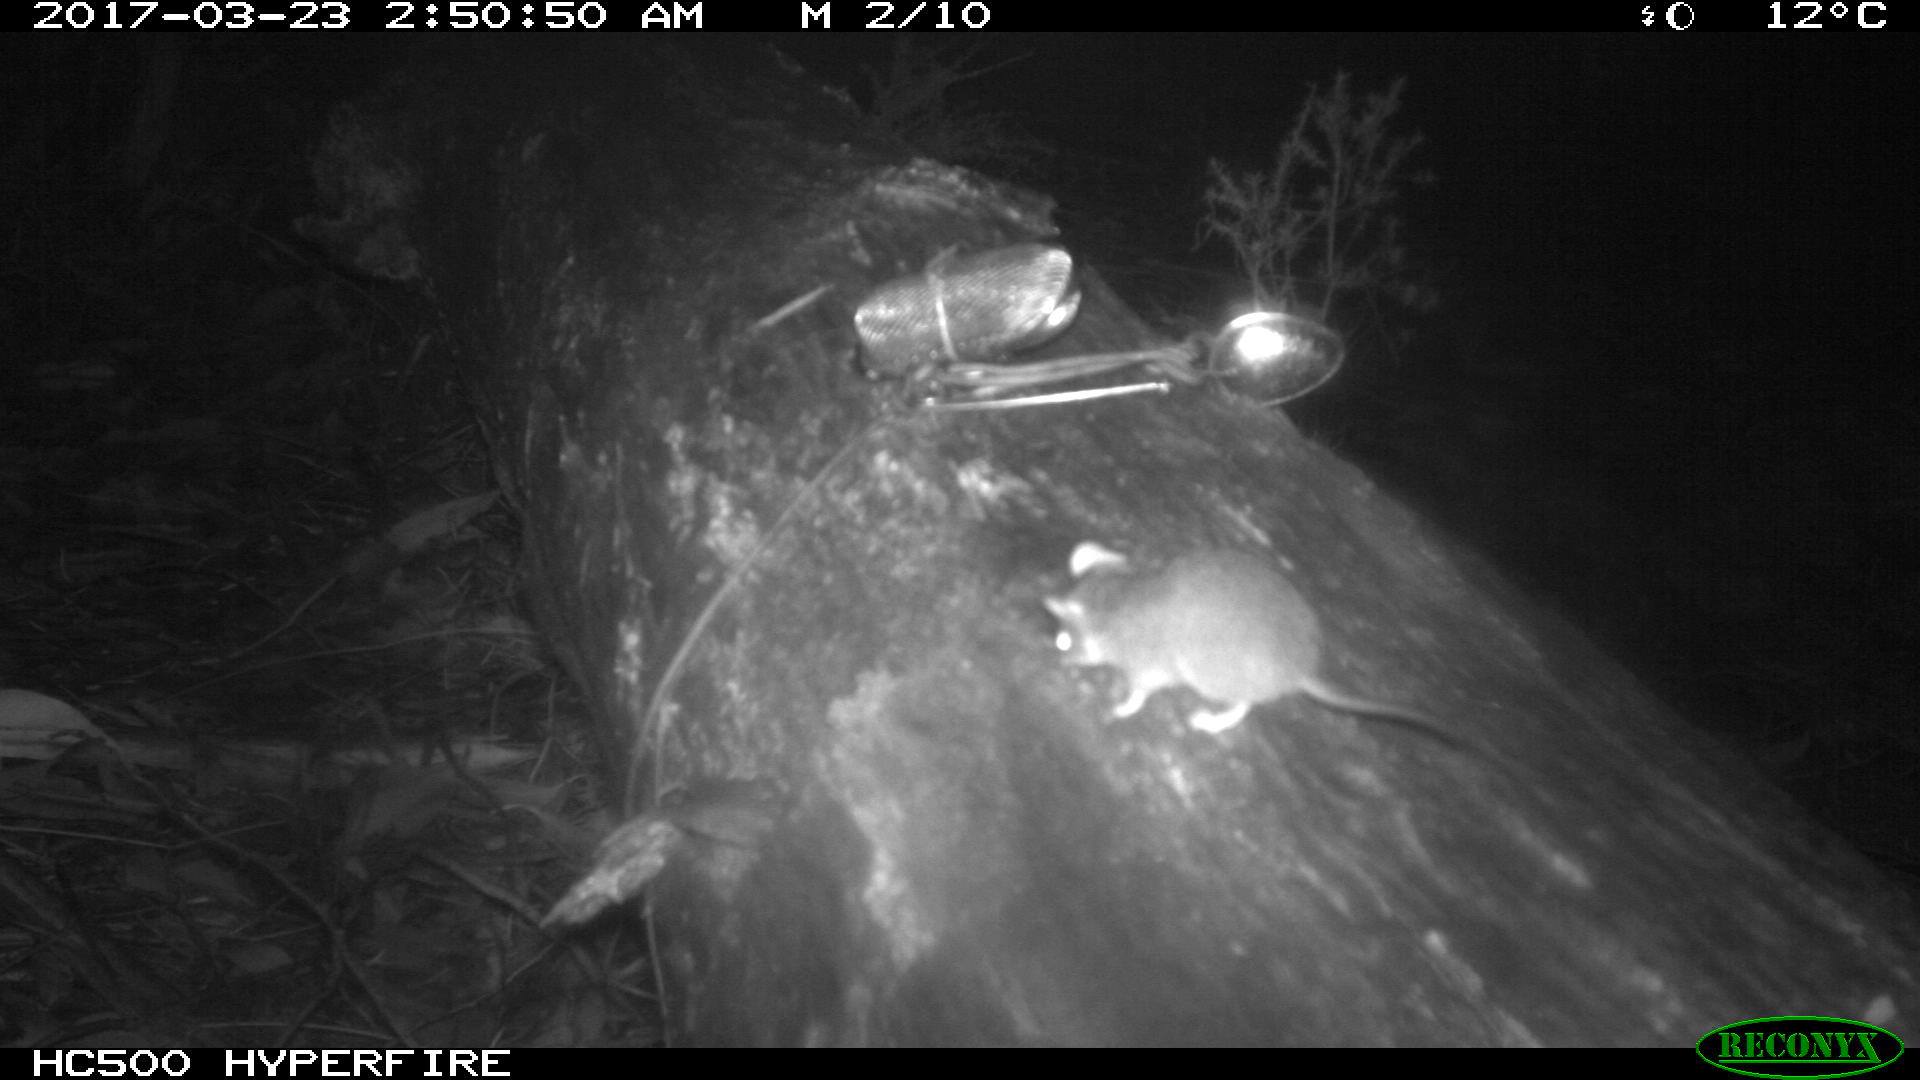 Pygmy possum caught on camera